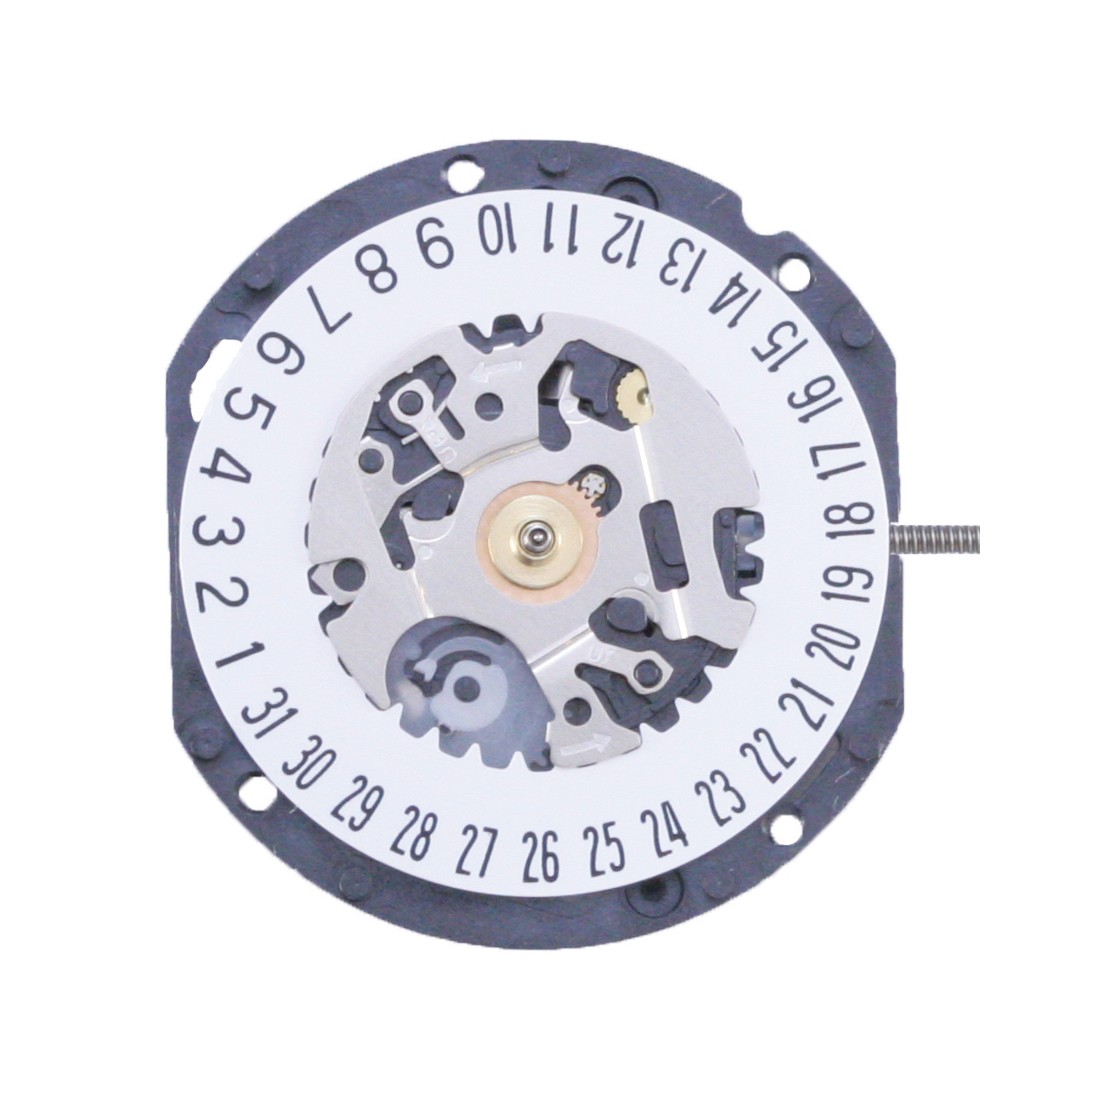 Hattori VX12-D6 Quartz Watch Movement Product Thumbail (View full Size)